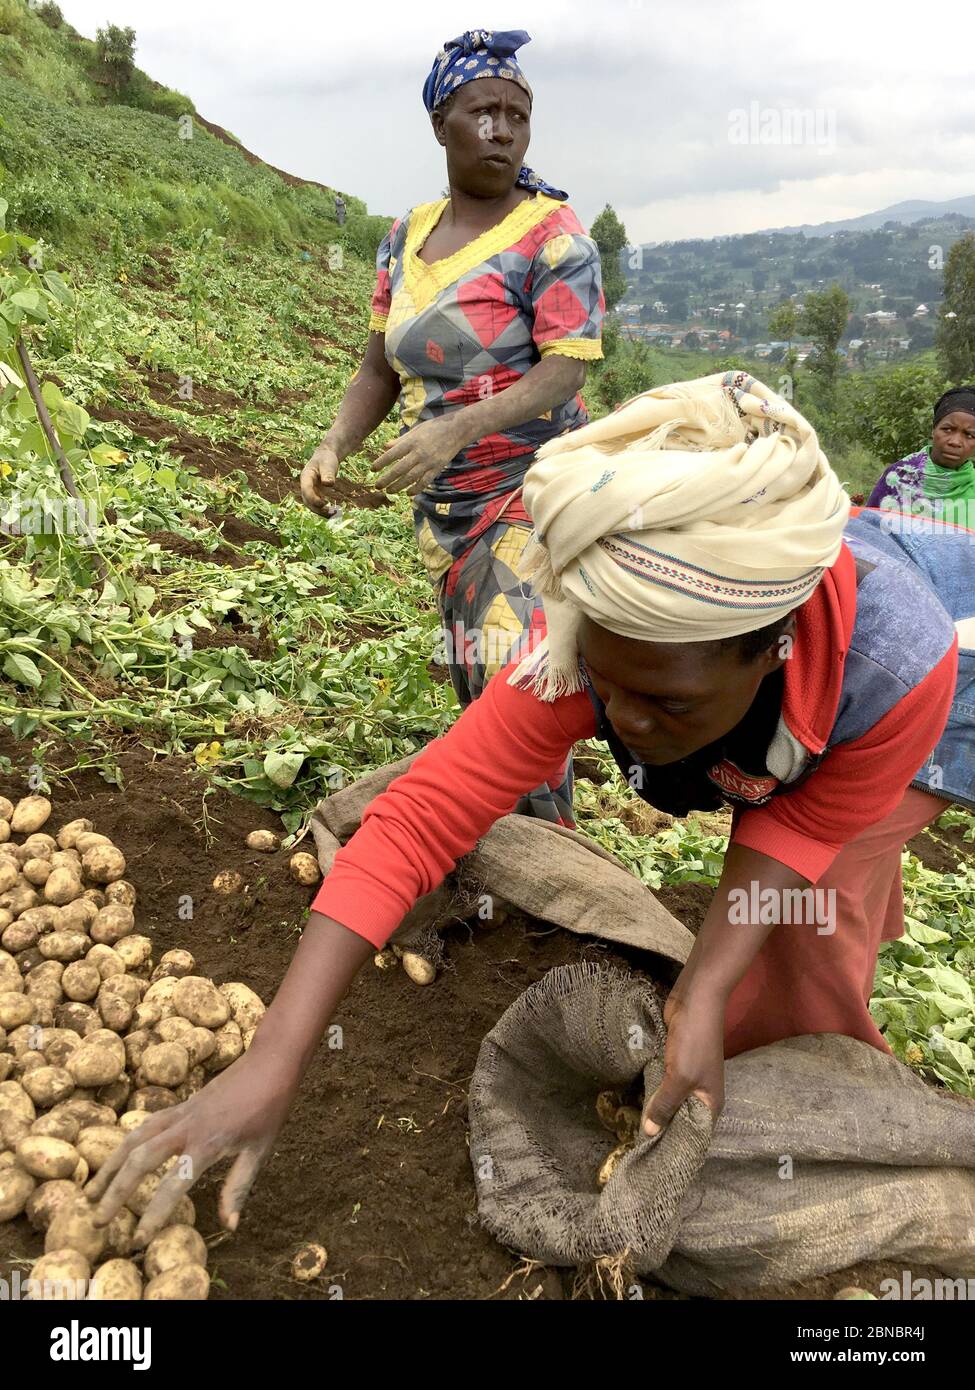 12 July 2019 - Kisungu, Rwanda: Subsistence farmers in central Africa, Rwanda, harvesting potatoes Stock Photo